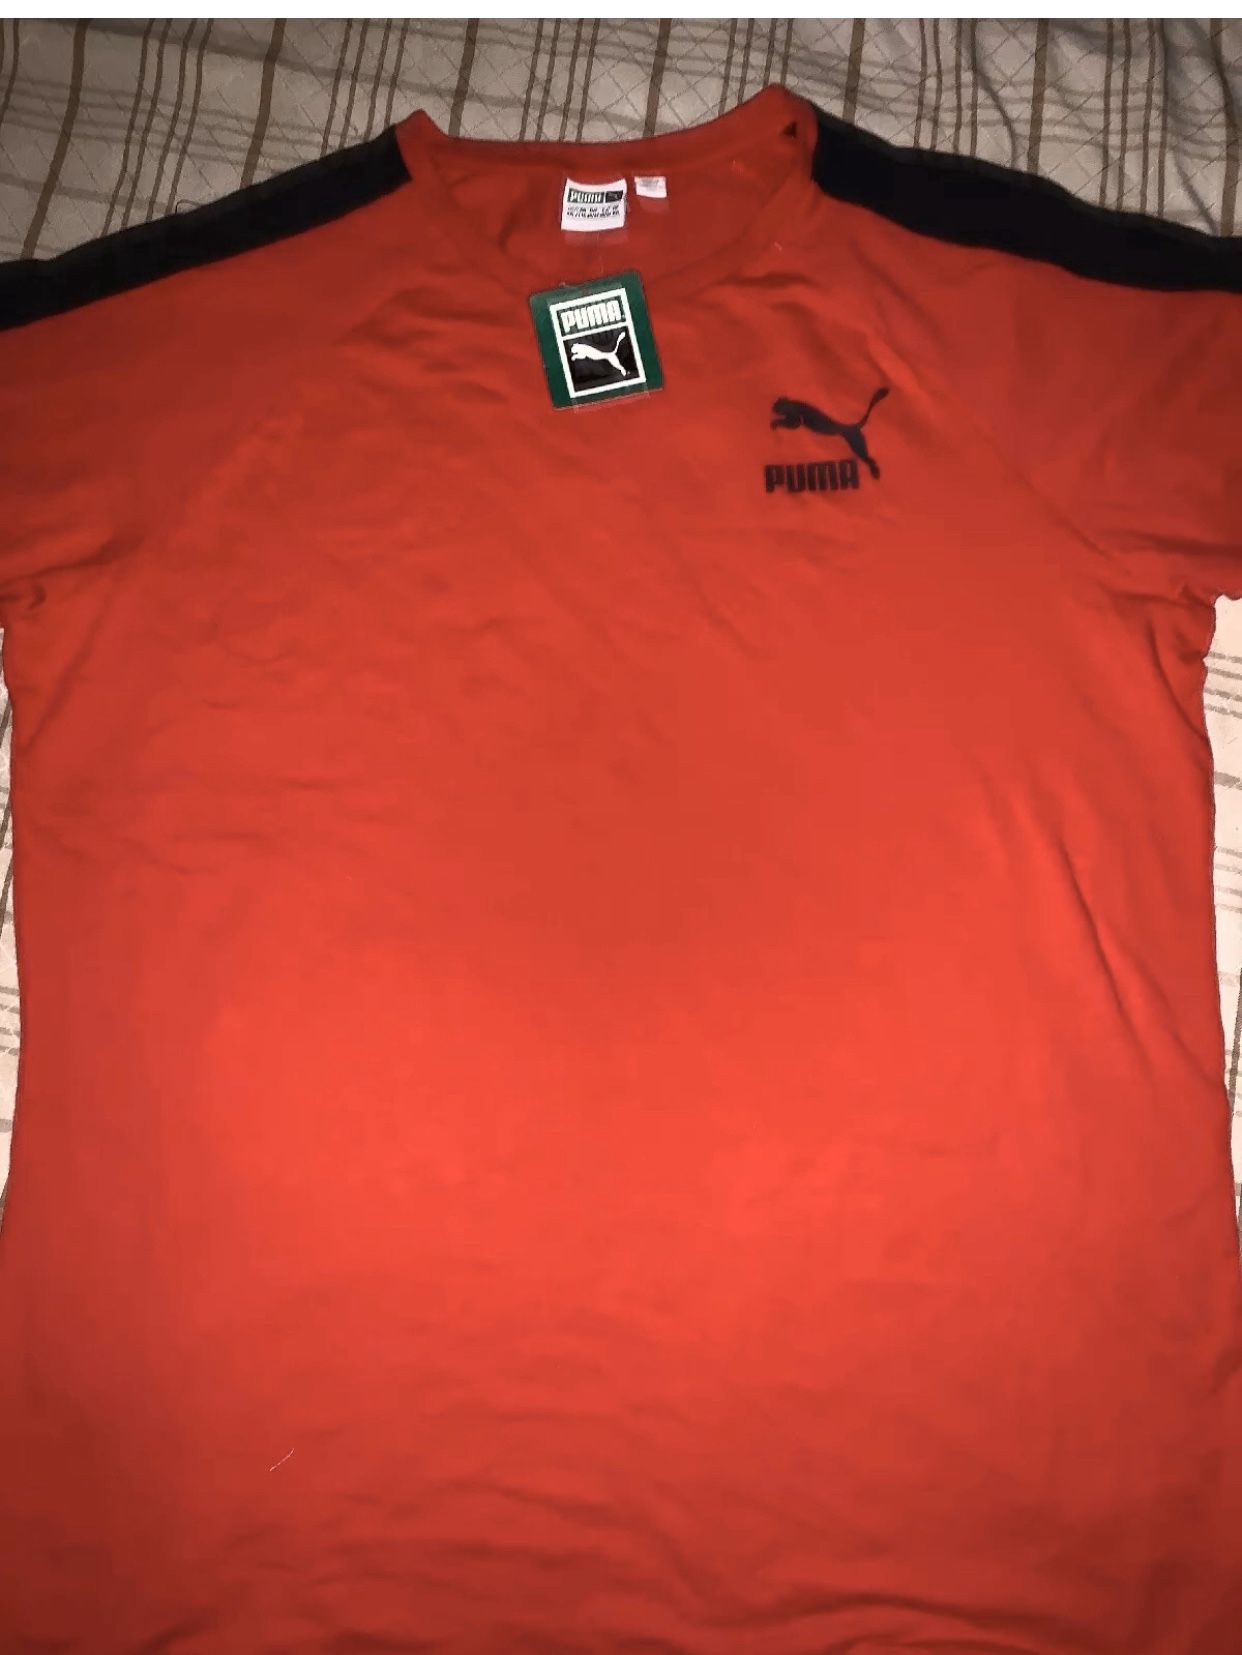 Red And Black Puma Shirt Size XXL